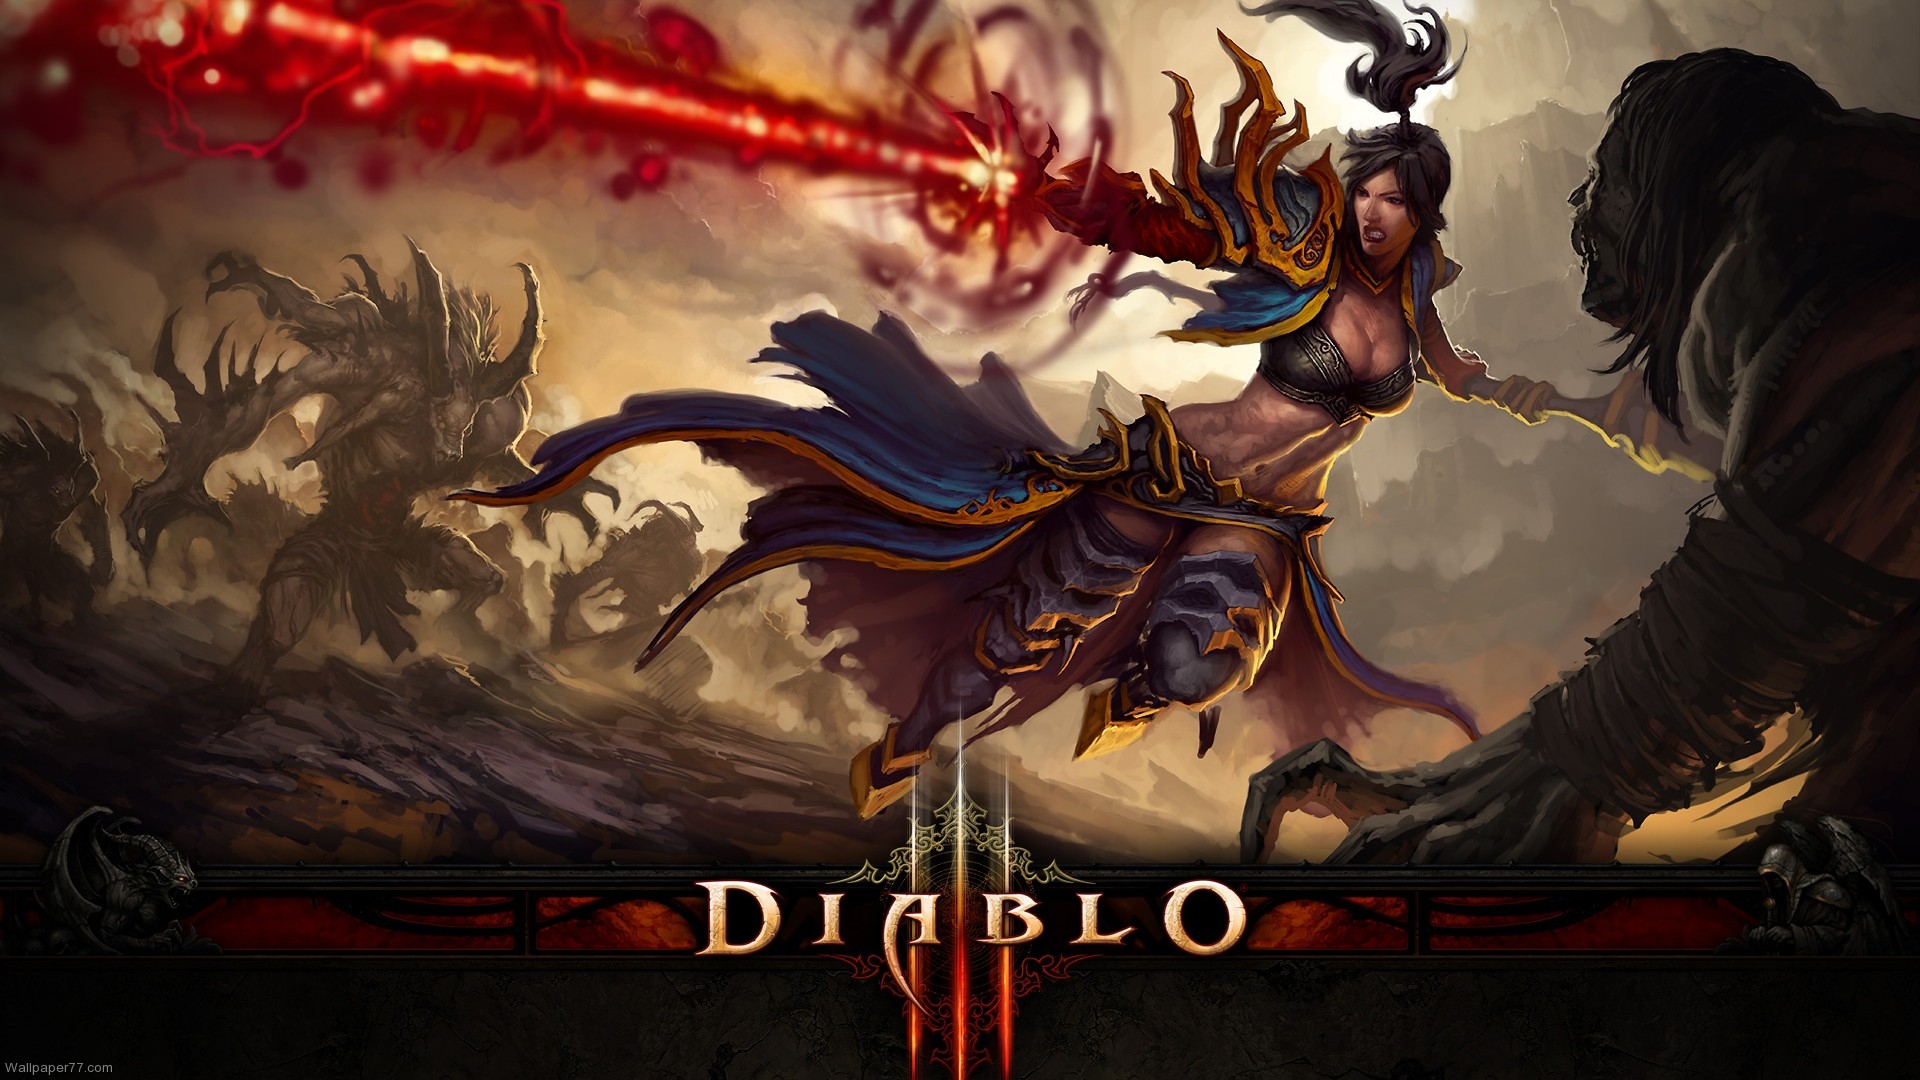 Diablo Wizard Wallpaper Game Jpg